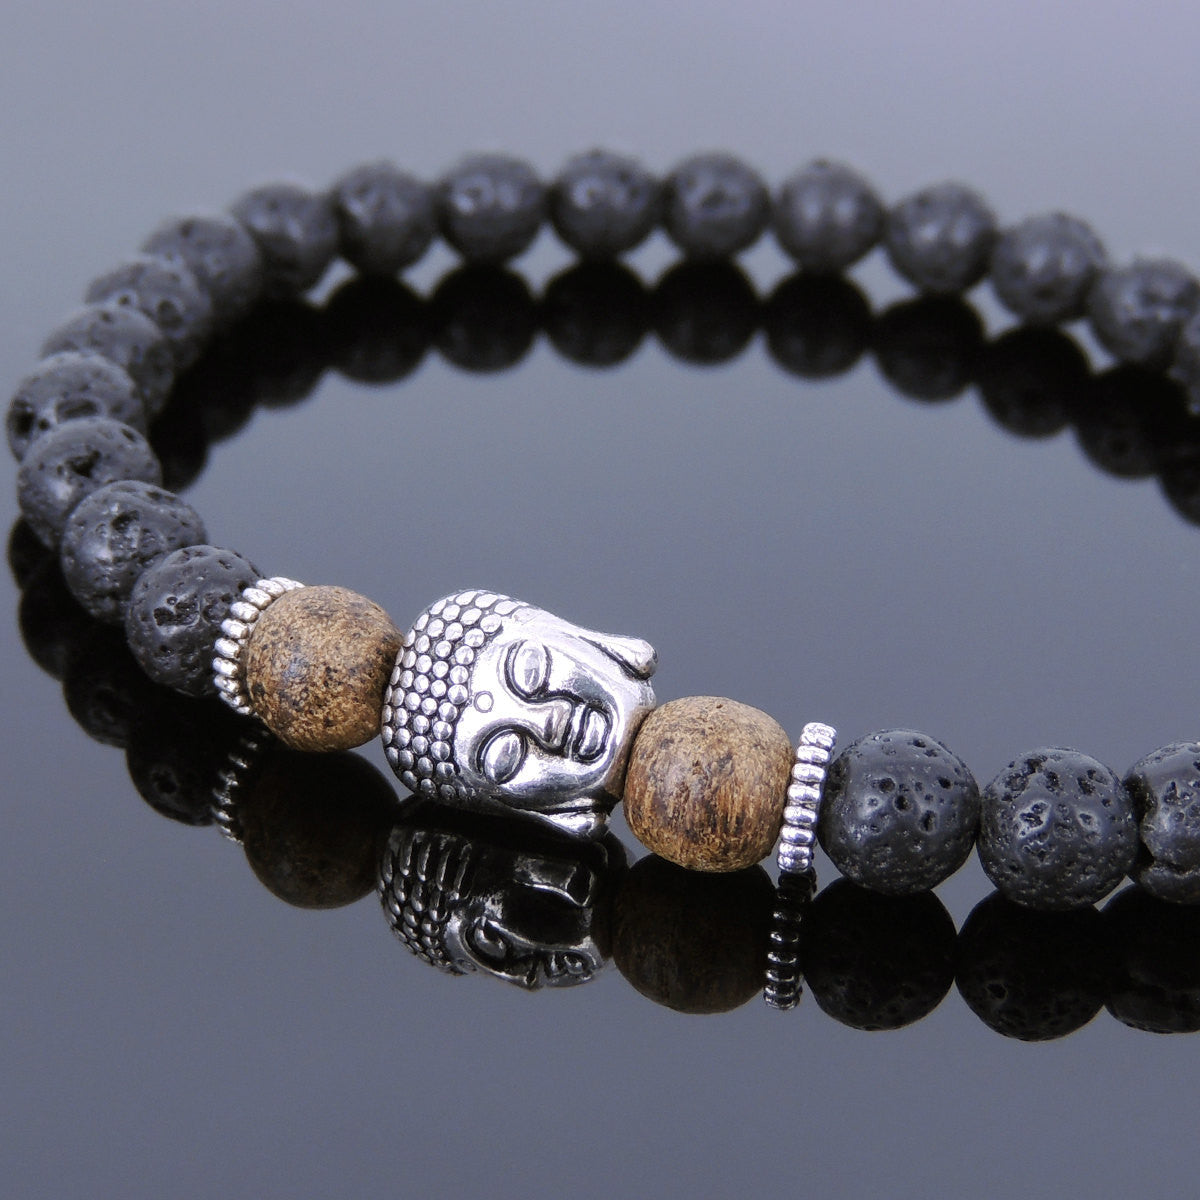 Agarwood & Lava Rock Healing Stone Bracelet with Tibetan Silver Sakyamuni Buddha & Spacers - Handmade by Gem & Silver TSB126